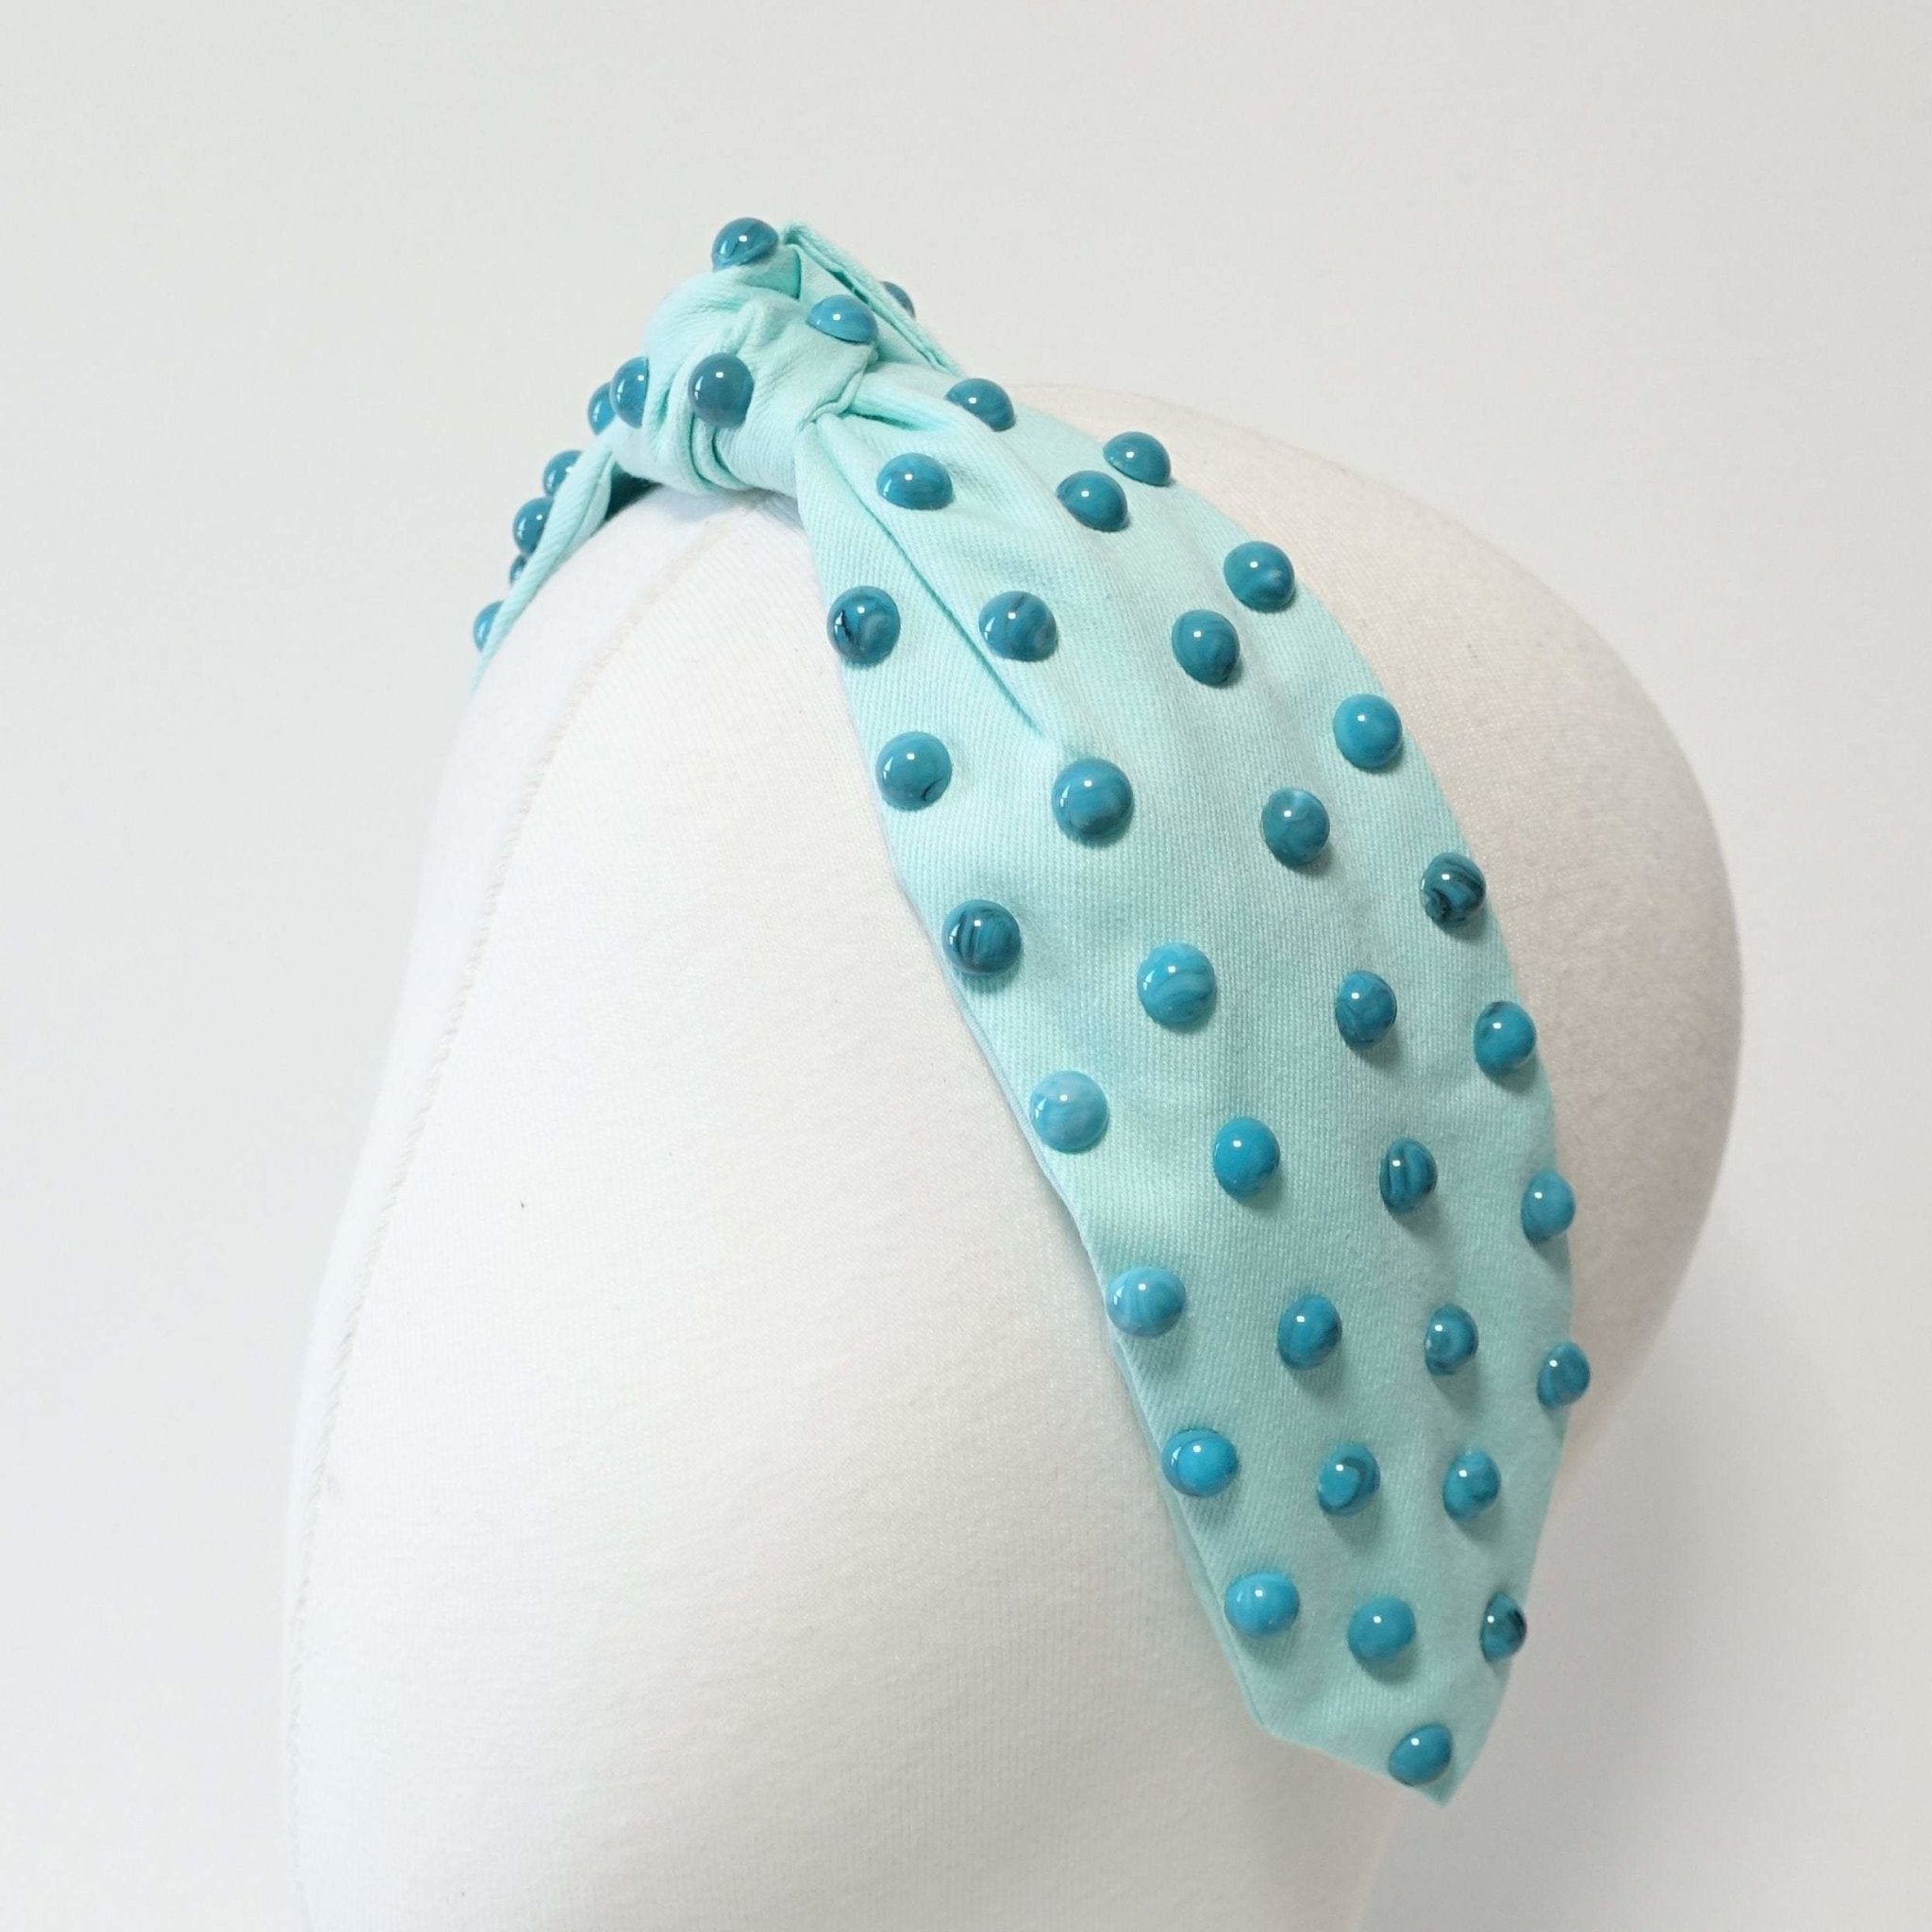 VeryShine marble pearl ball knot headband luxury woman hairband